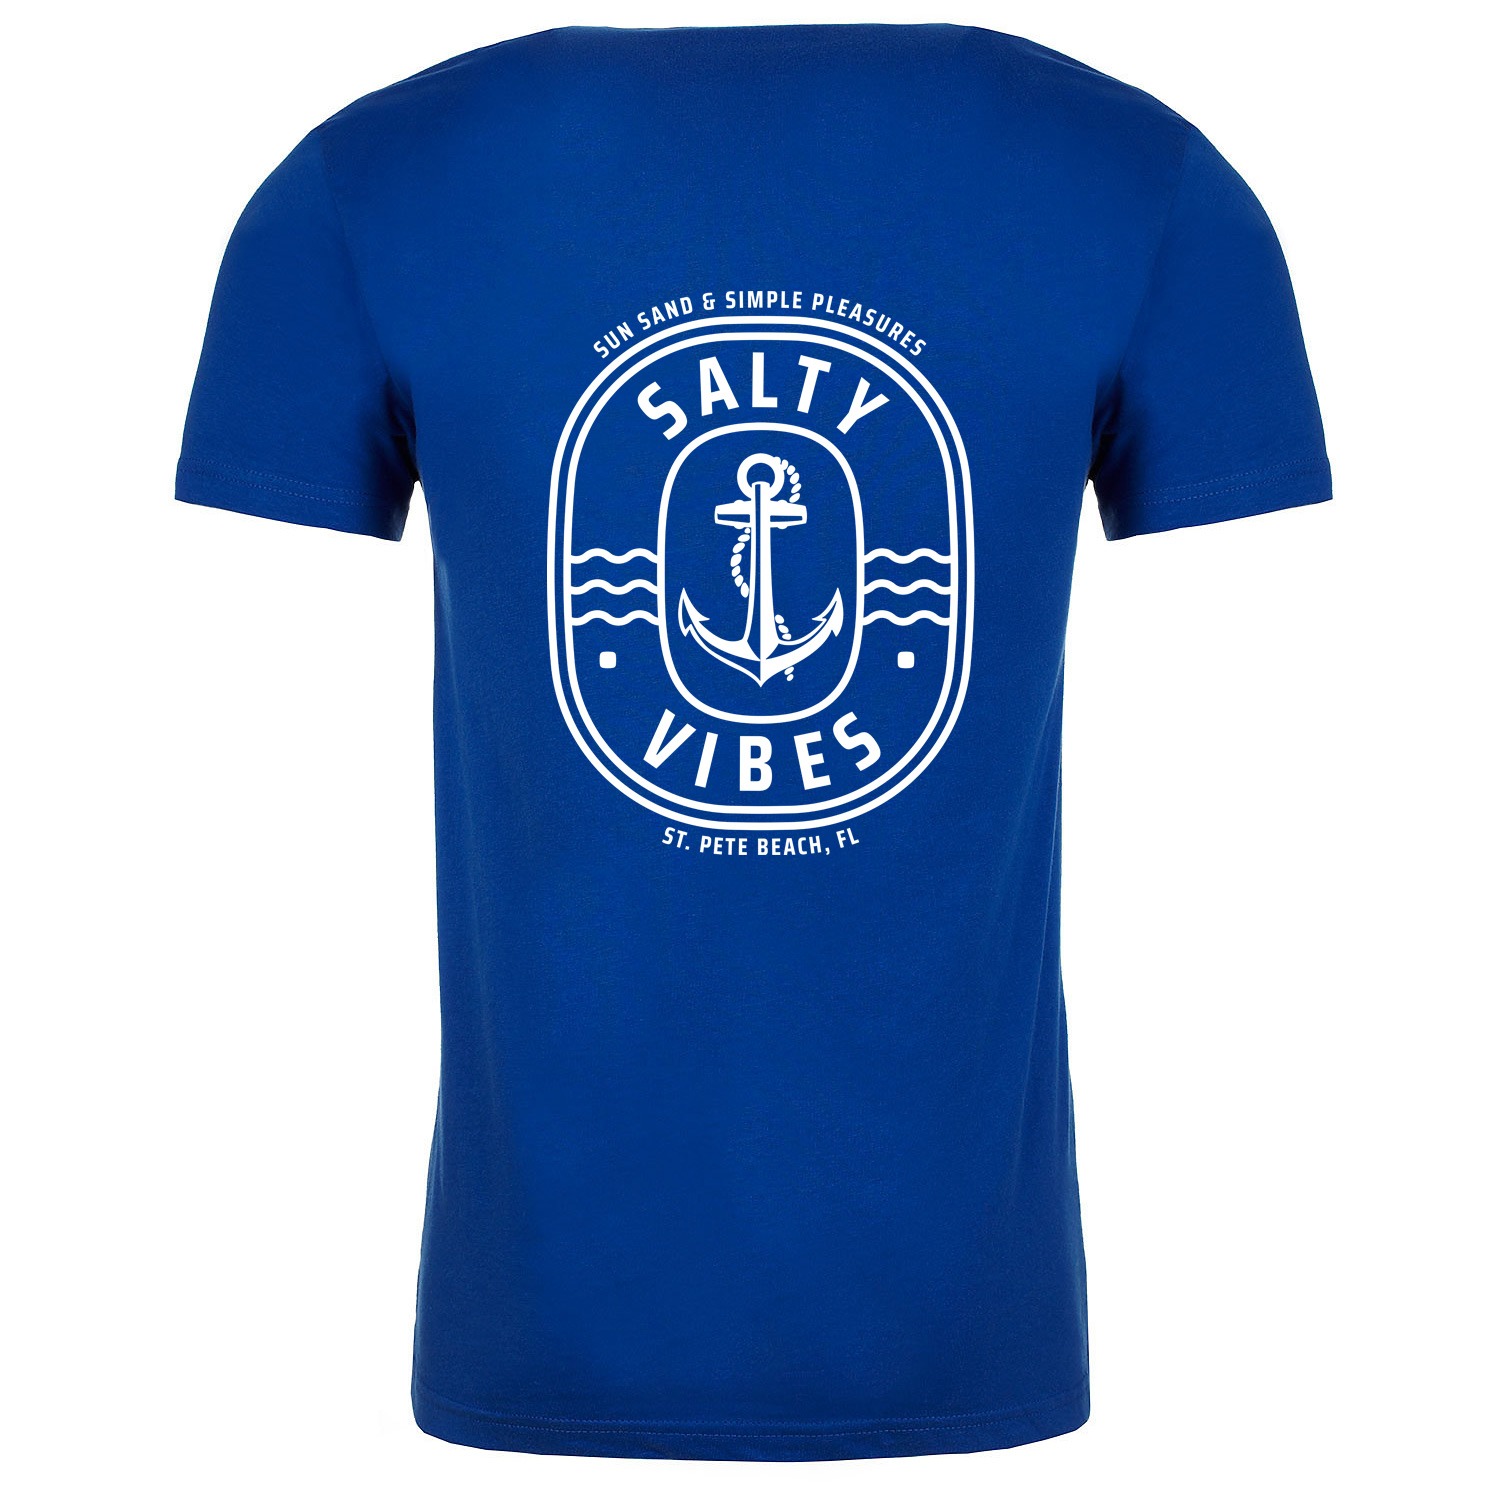 Salty Vibes Anchor Unisex T-Shirt - Royal Blue, 2XL